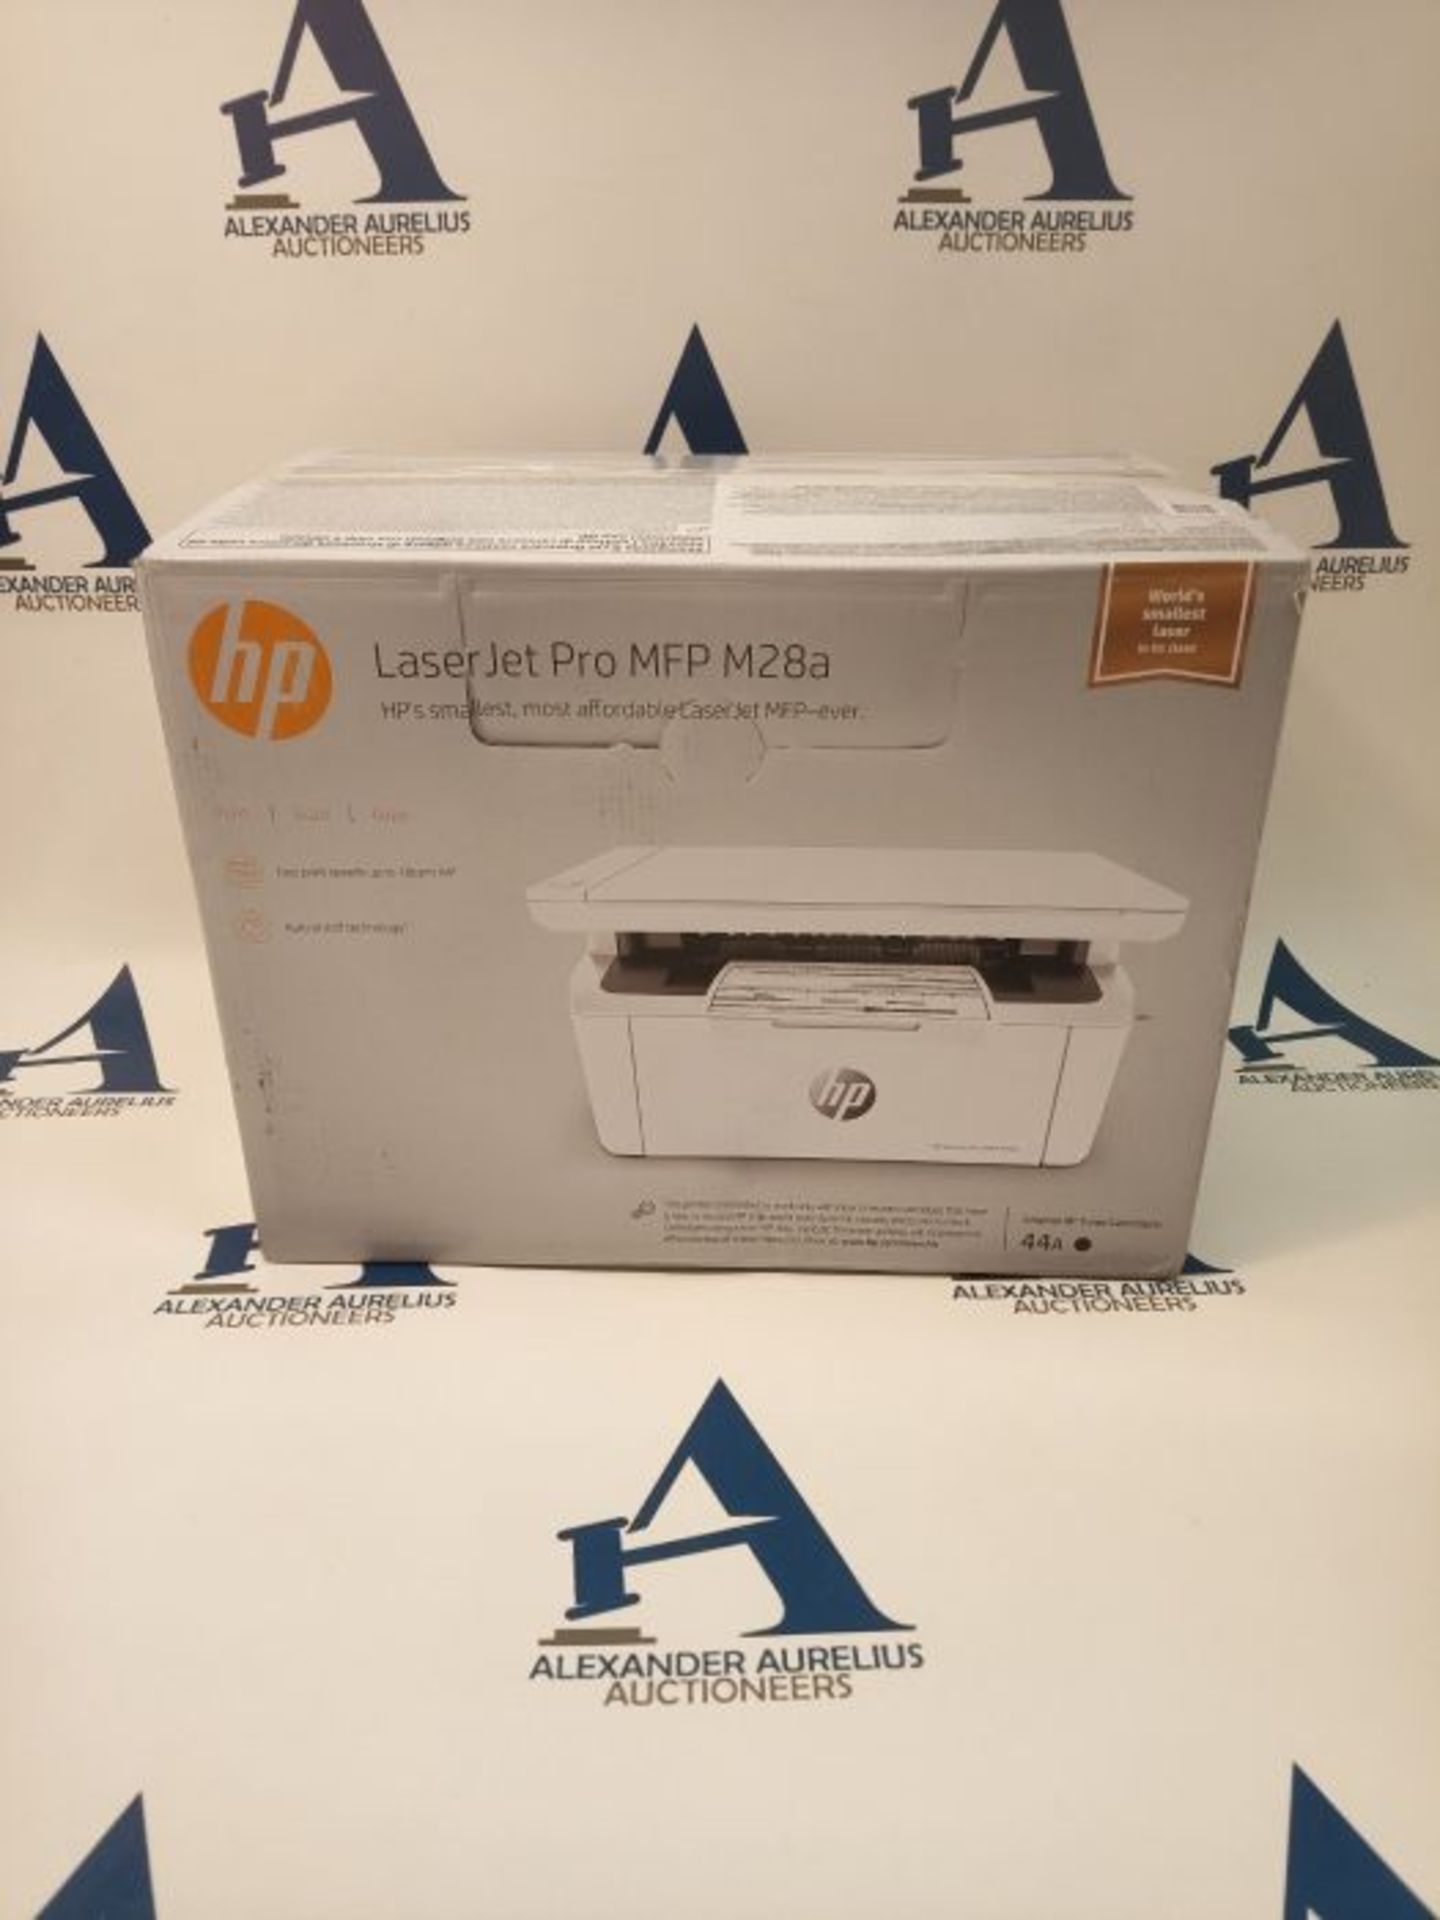 RRP £99.00 HP LaserJet Pro MFP M28a Multi-Function Printer, White - Image 2 of 3